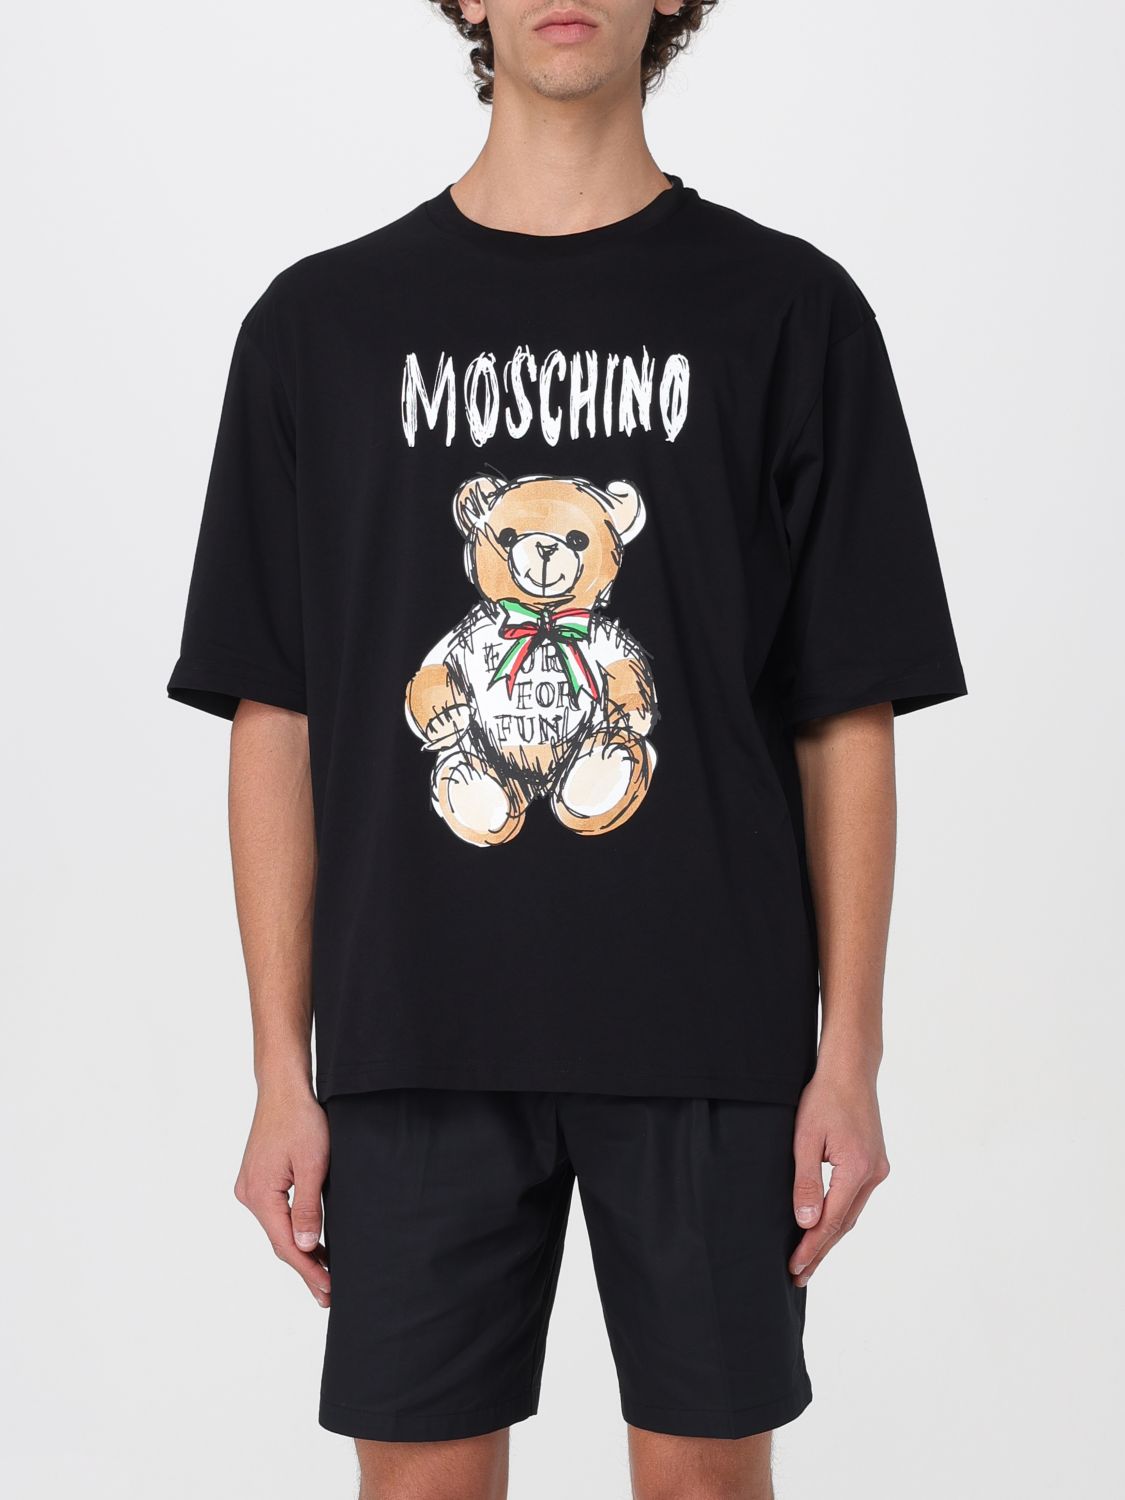 Moschino Couture T-Shirt MOSCHINO COUTURE Men colour Black